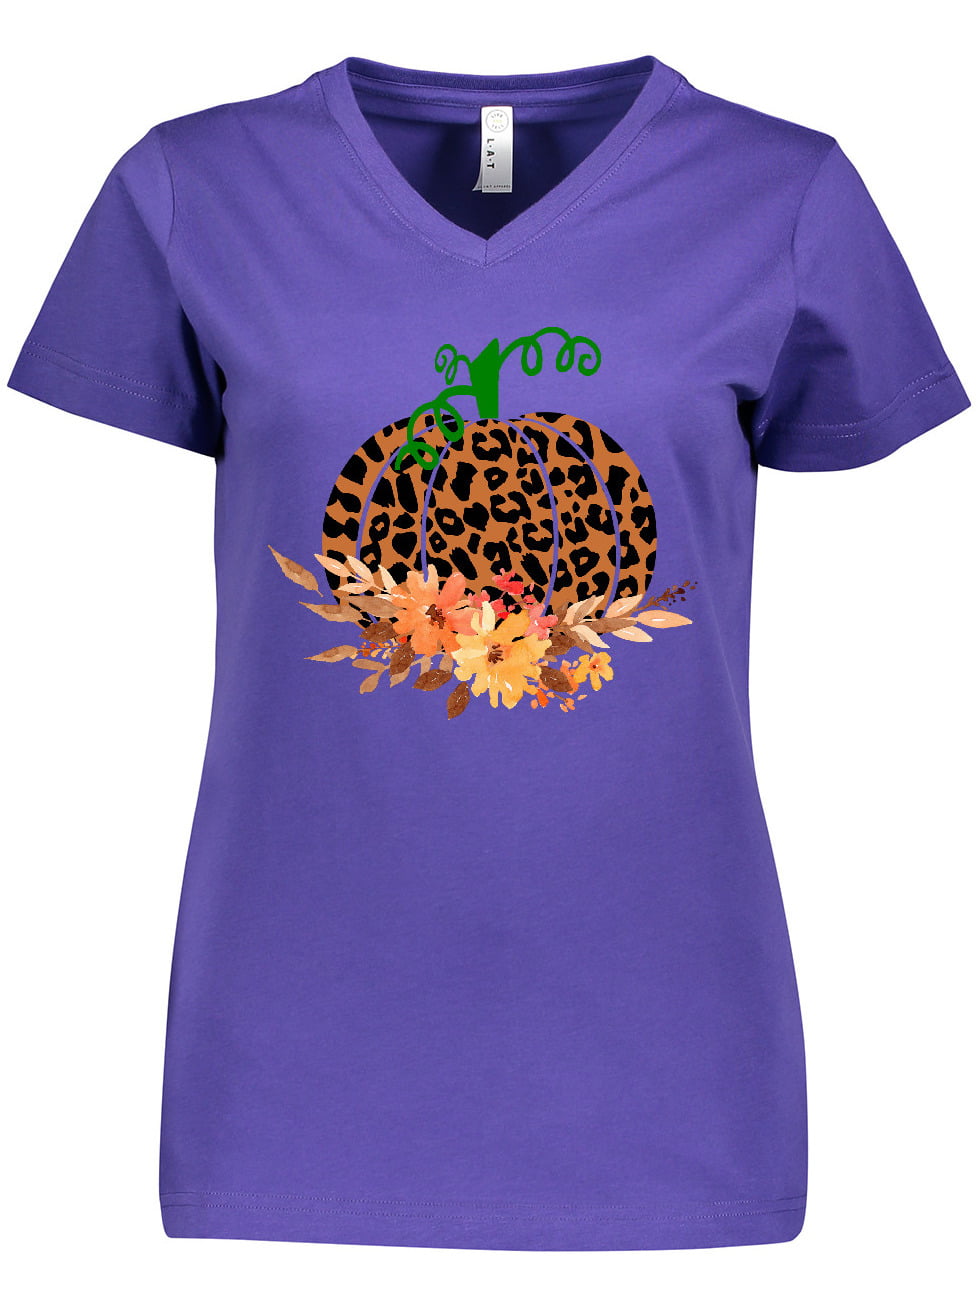 I Heart Love French Horn Logo Womens Tee Shirt Pick Size Color Petite Regular 